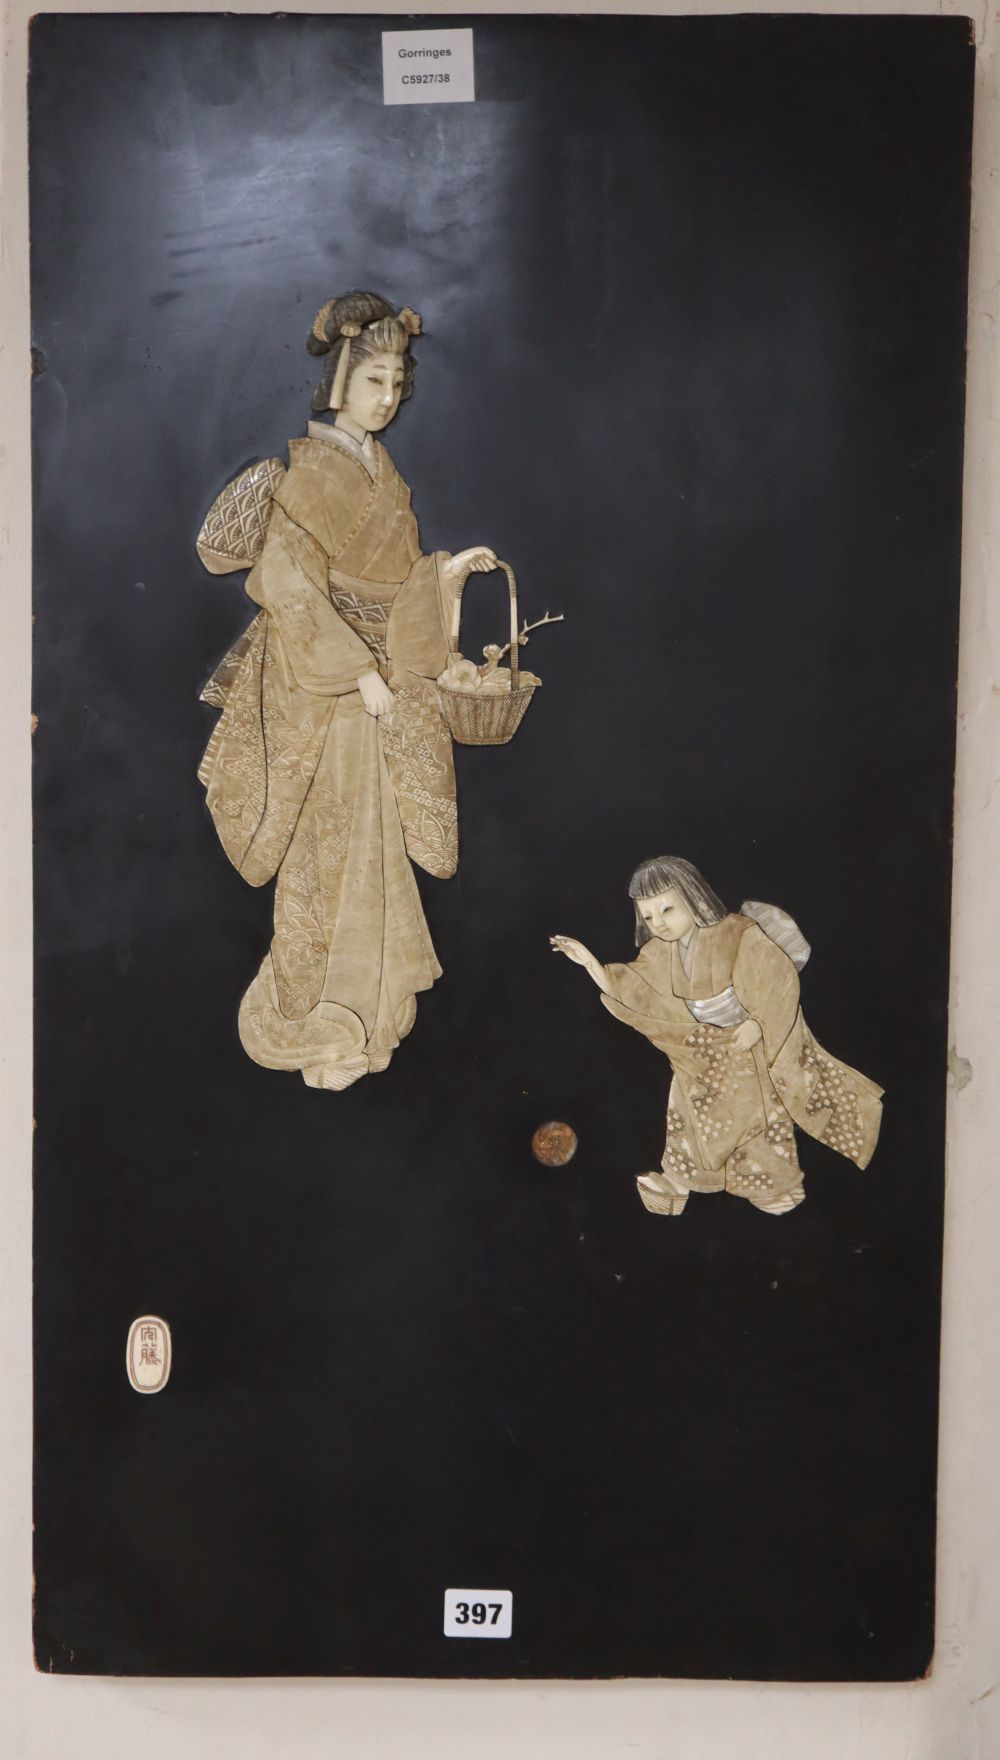 A Japanese shibayama panel, width 42cm, height 75cm